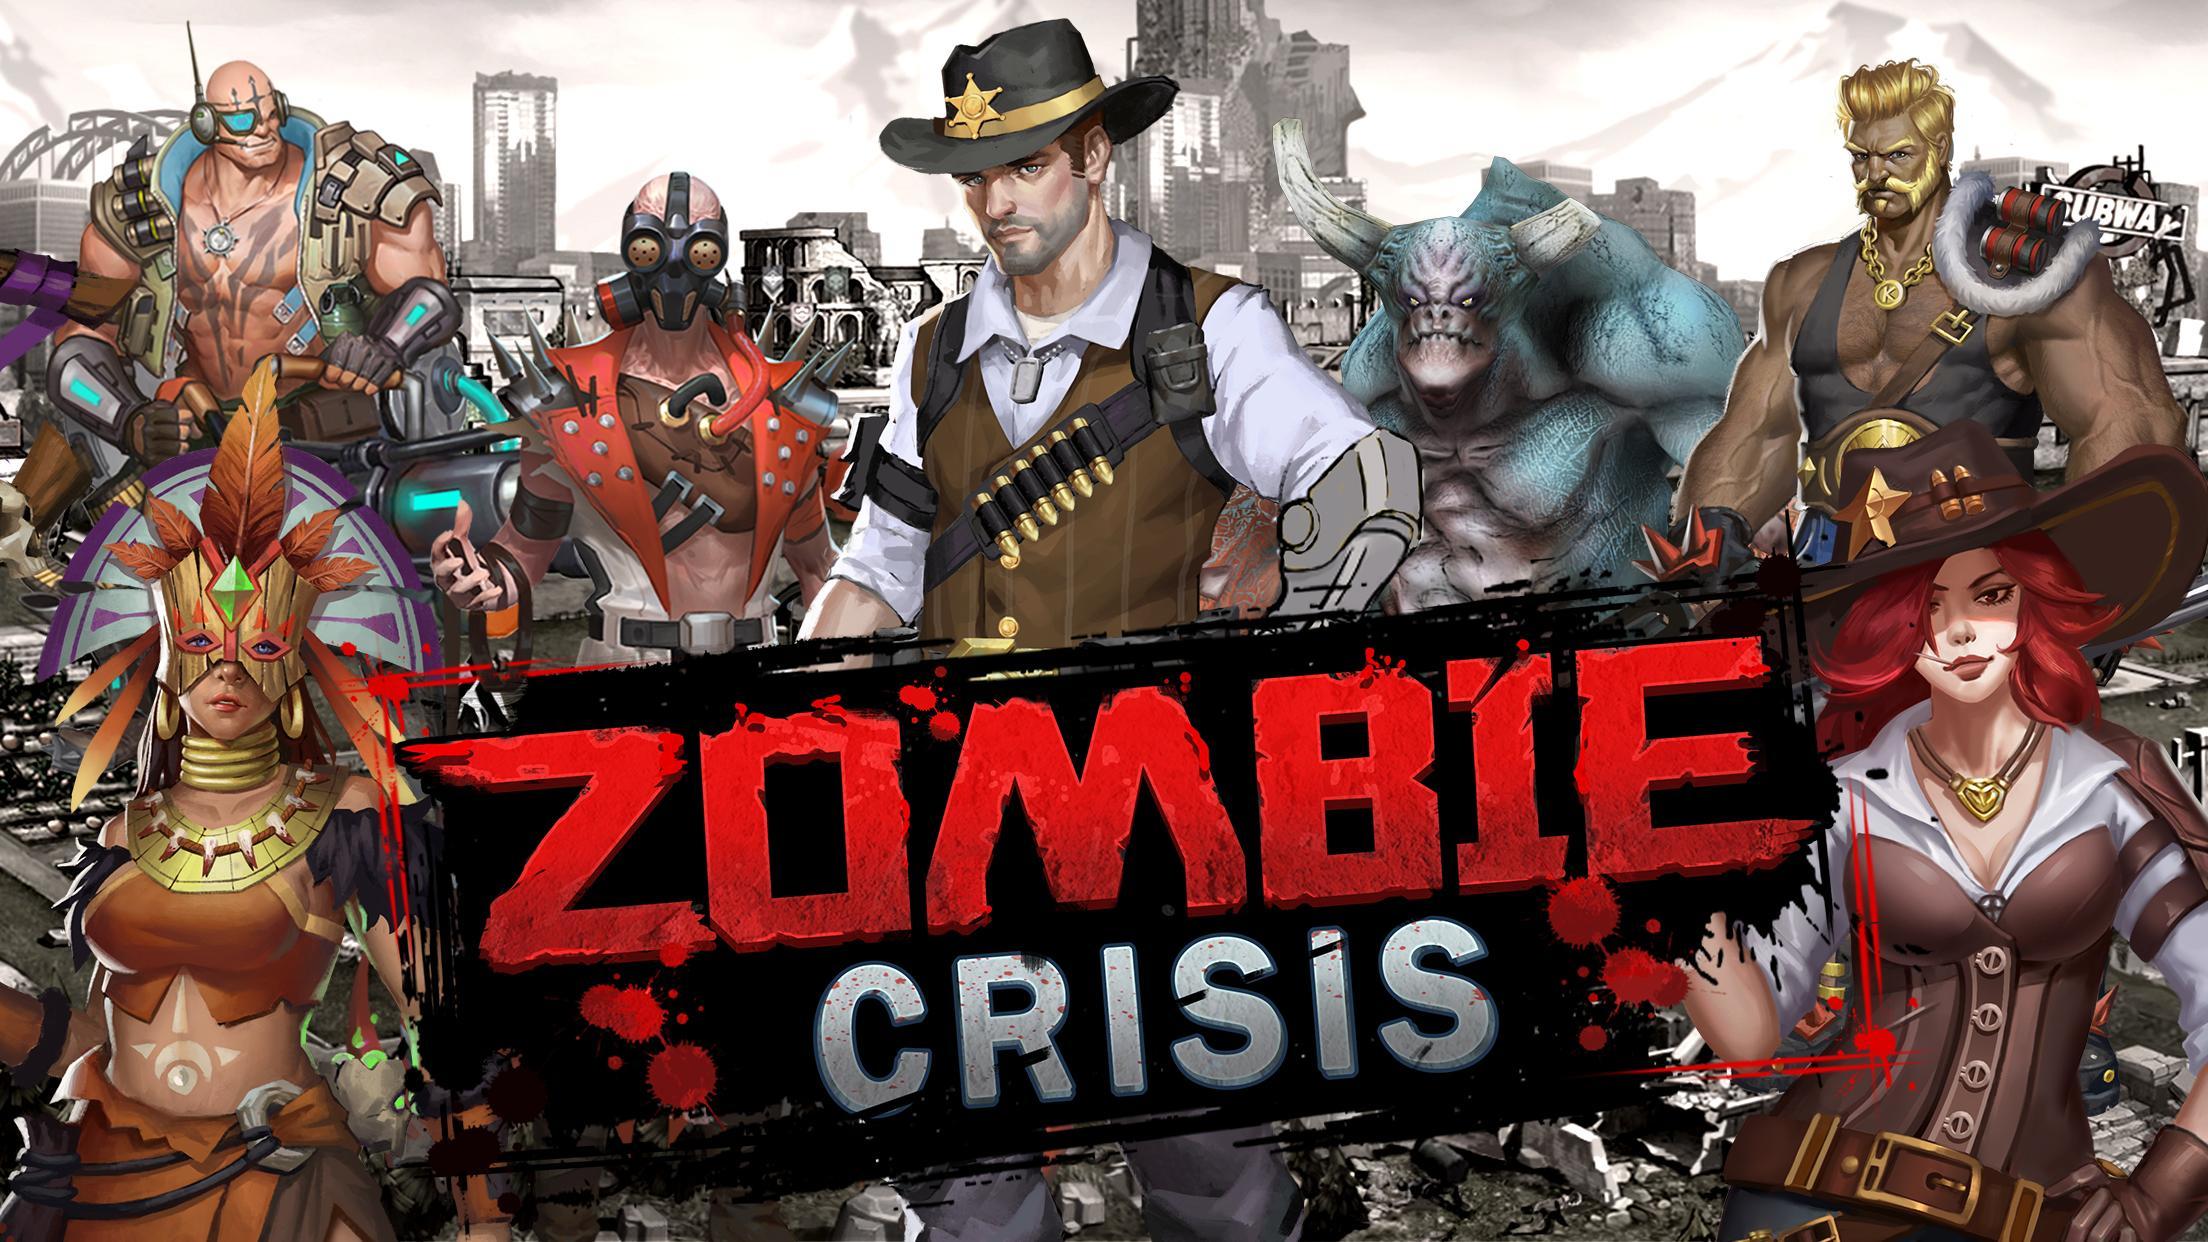 Screenshot 1 of Zombies Crisis: juego de rol de supervivencia 1.1.44